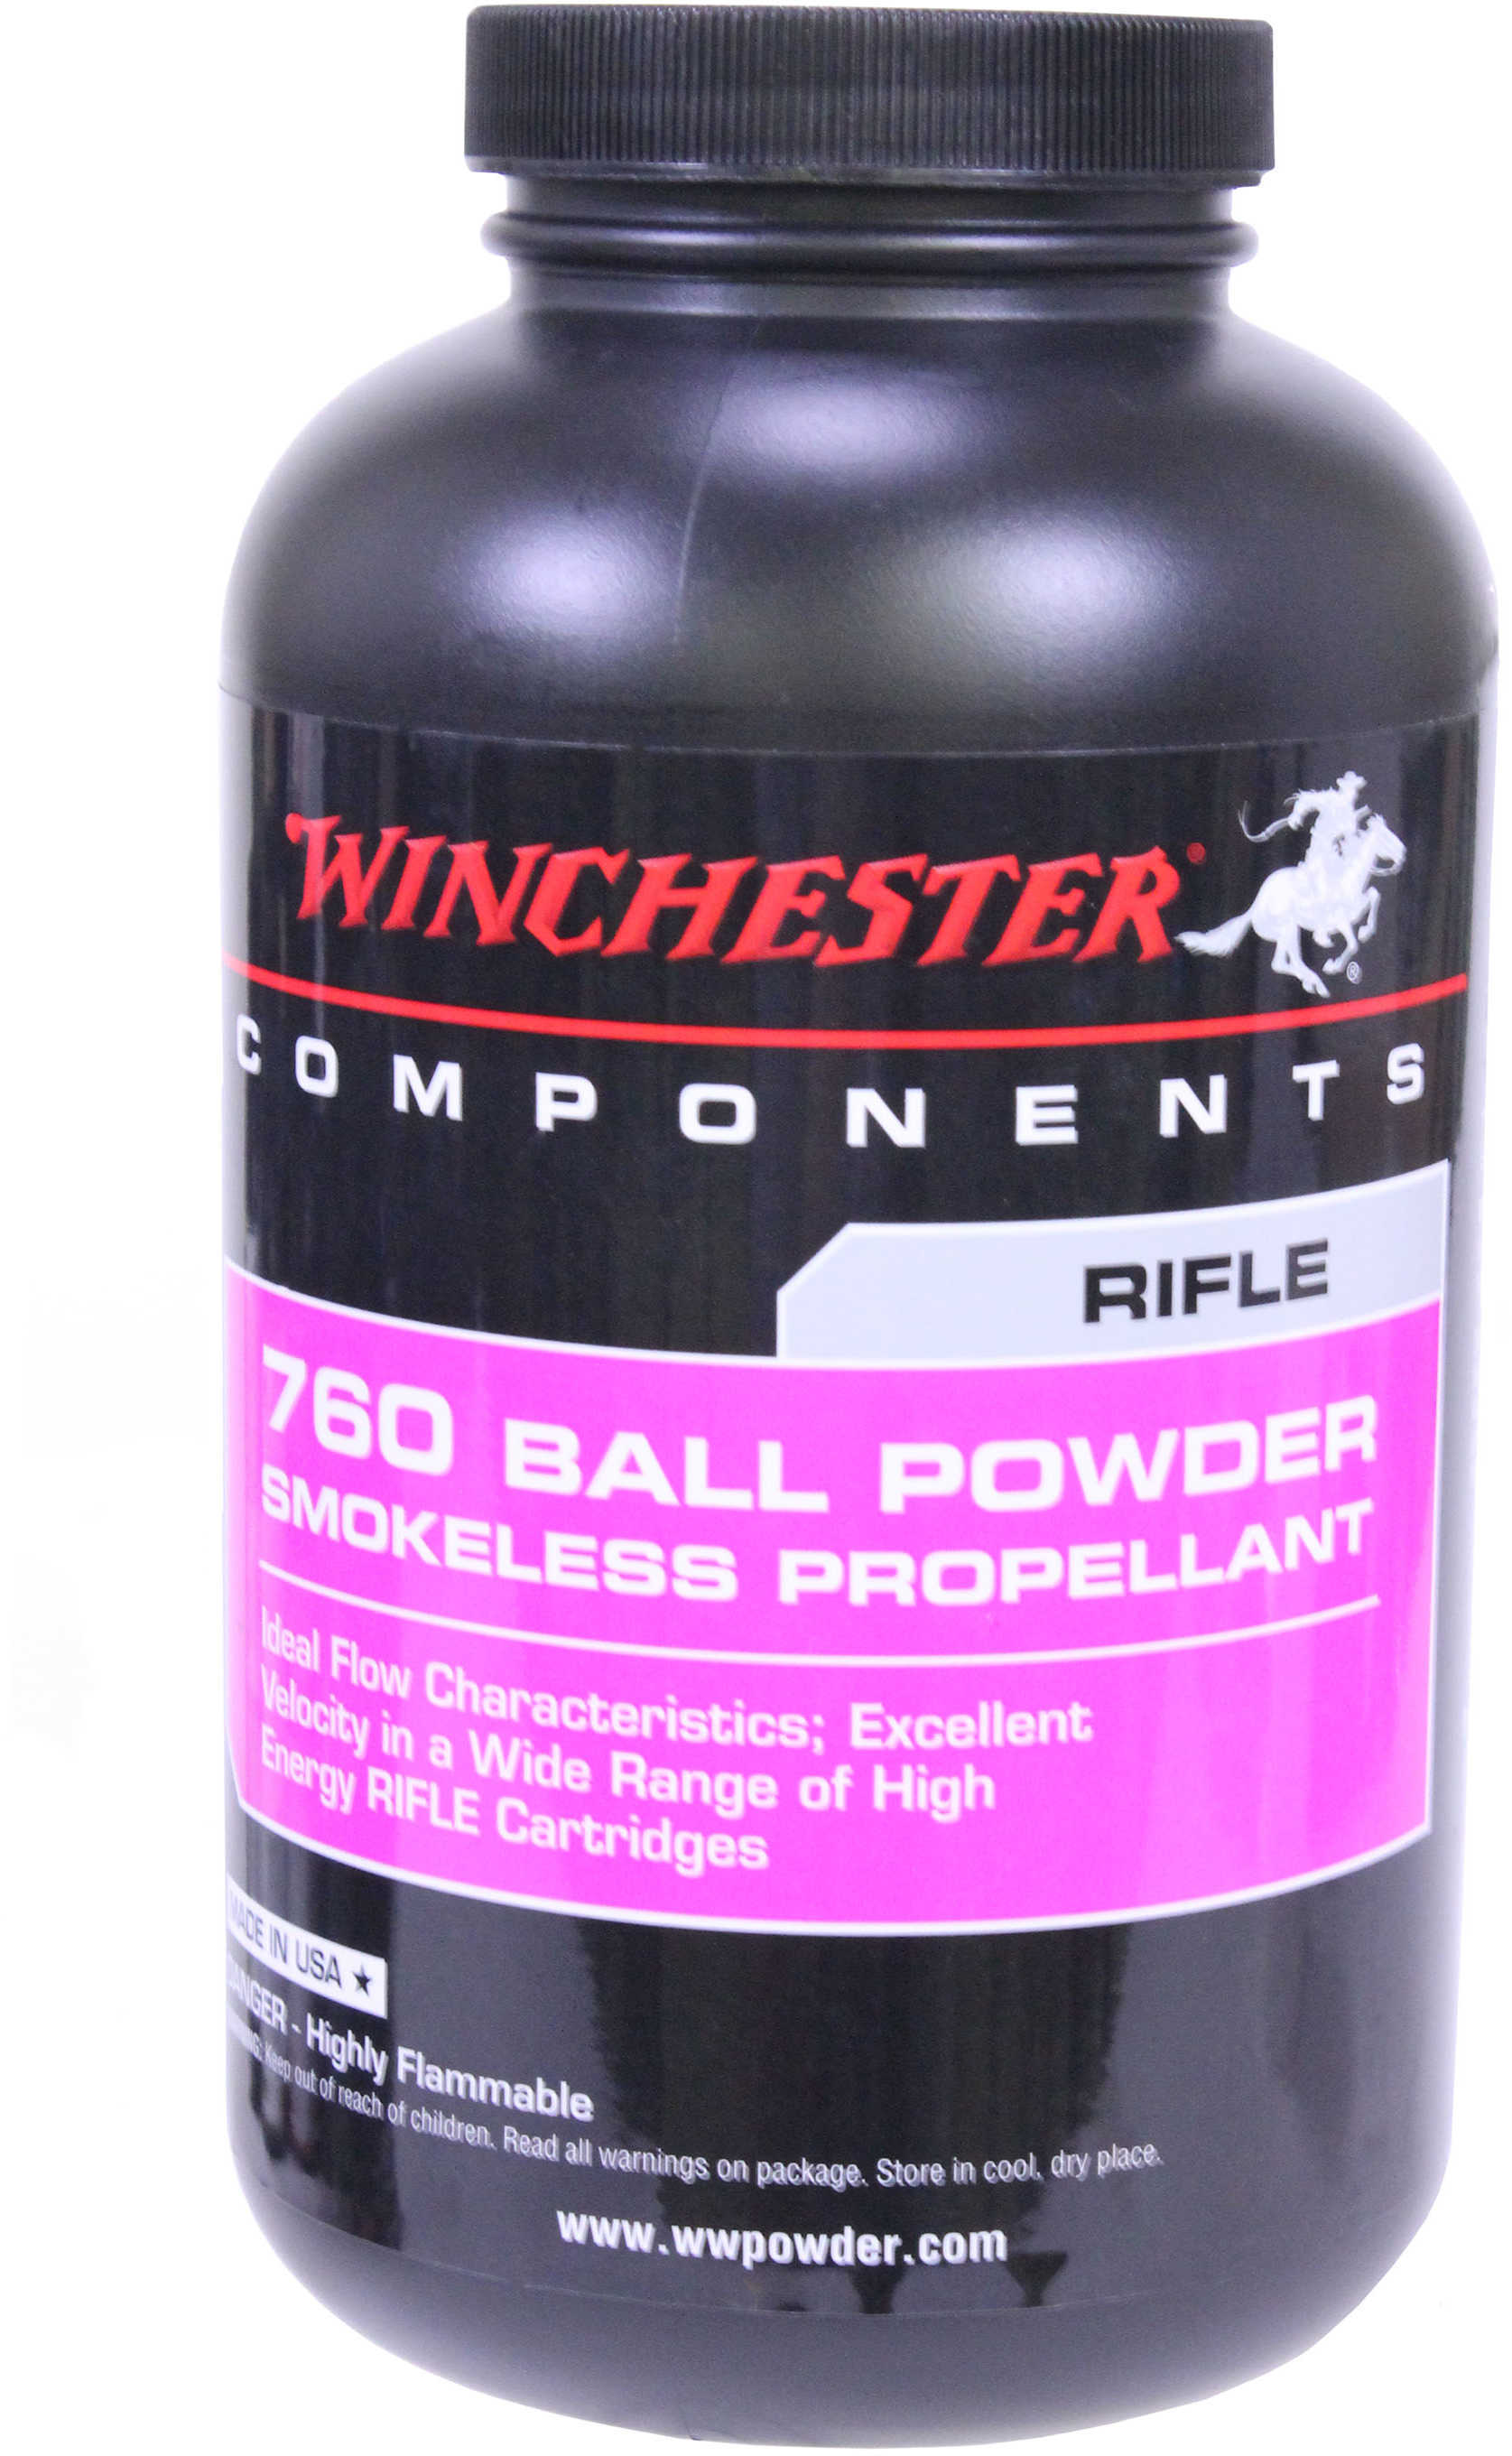 Winchester Powder 760 Smokeless 1 Lb